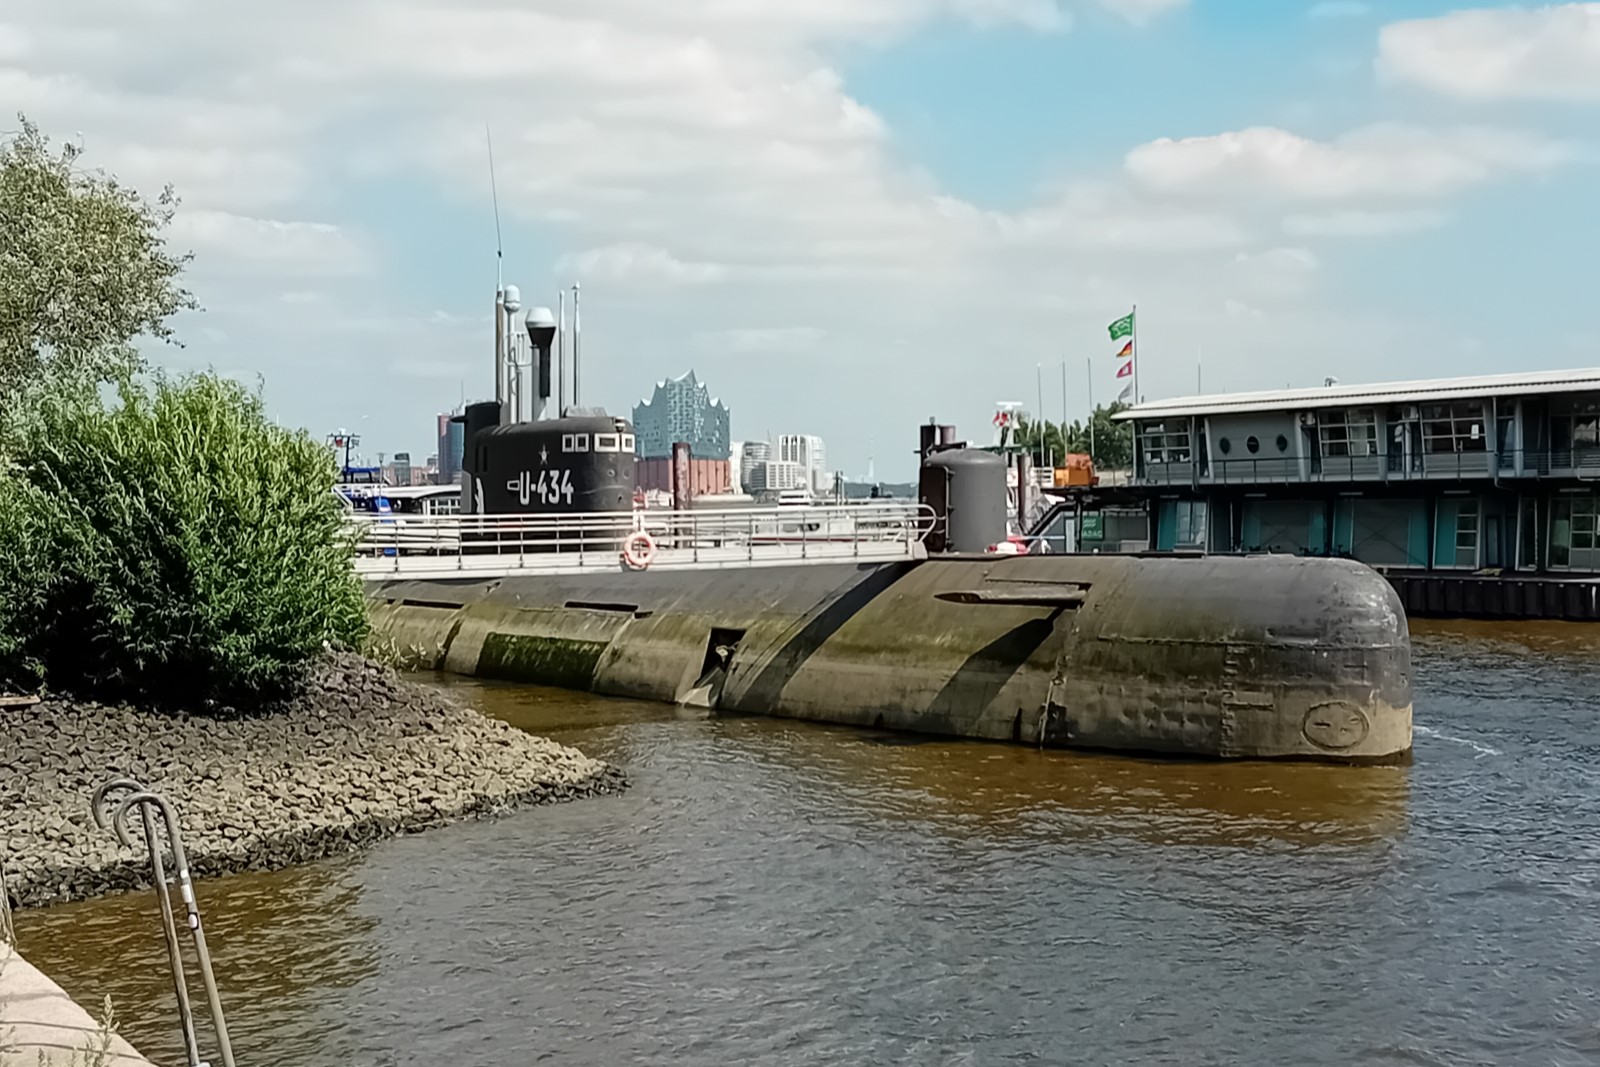 Museumsschiff U-434